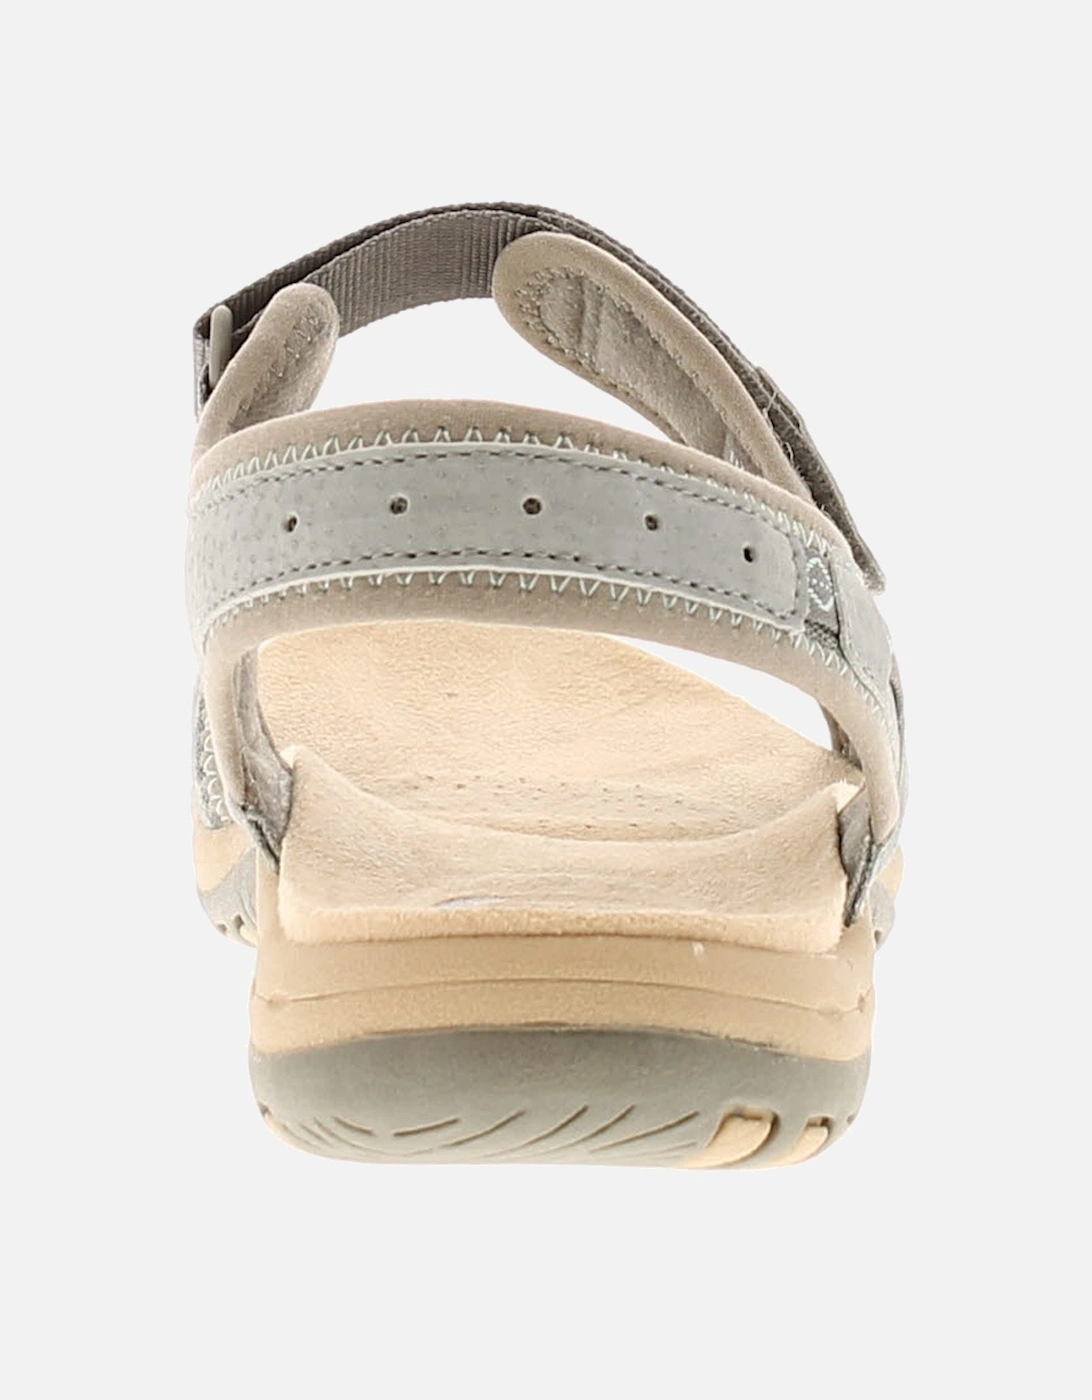 Free Spirit Womens Sandals Walking Trekking Frisco Touch Fastening grey UK Size